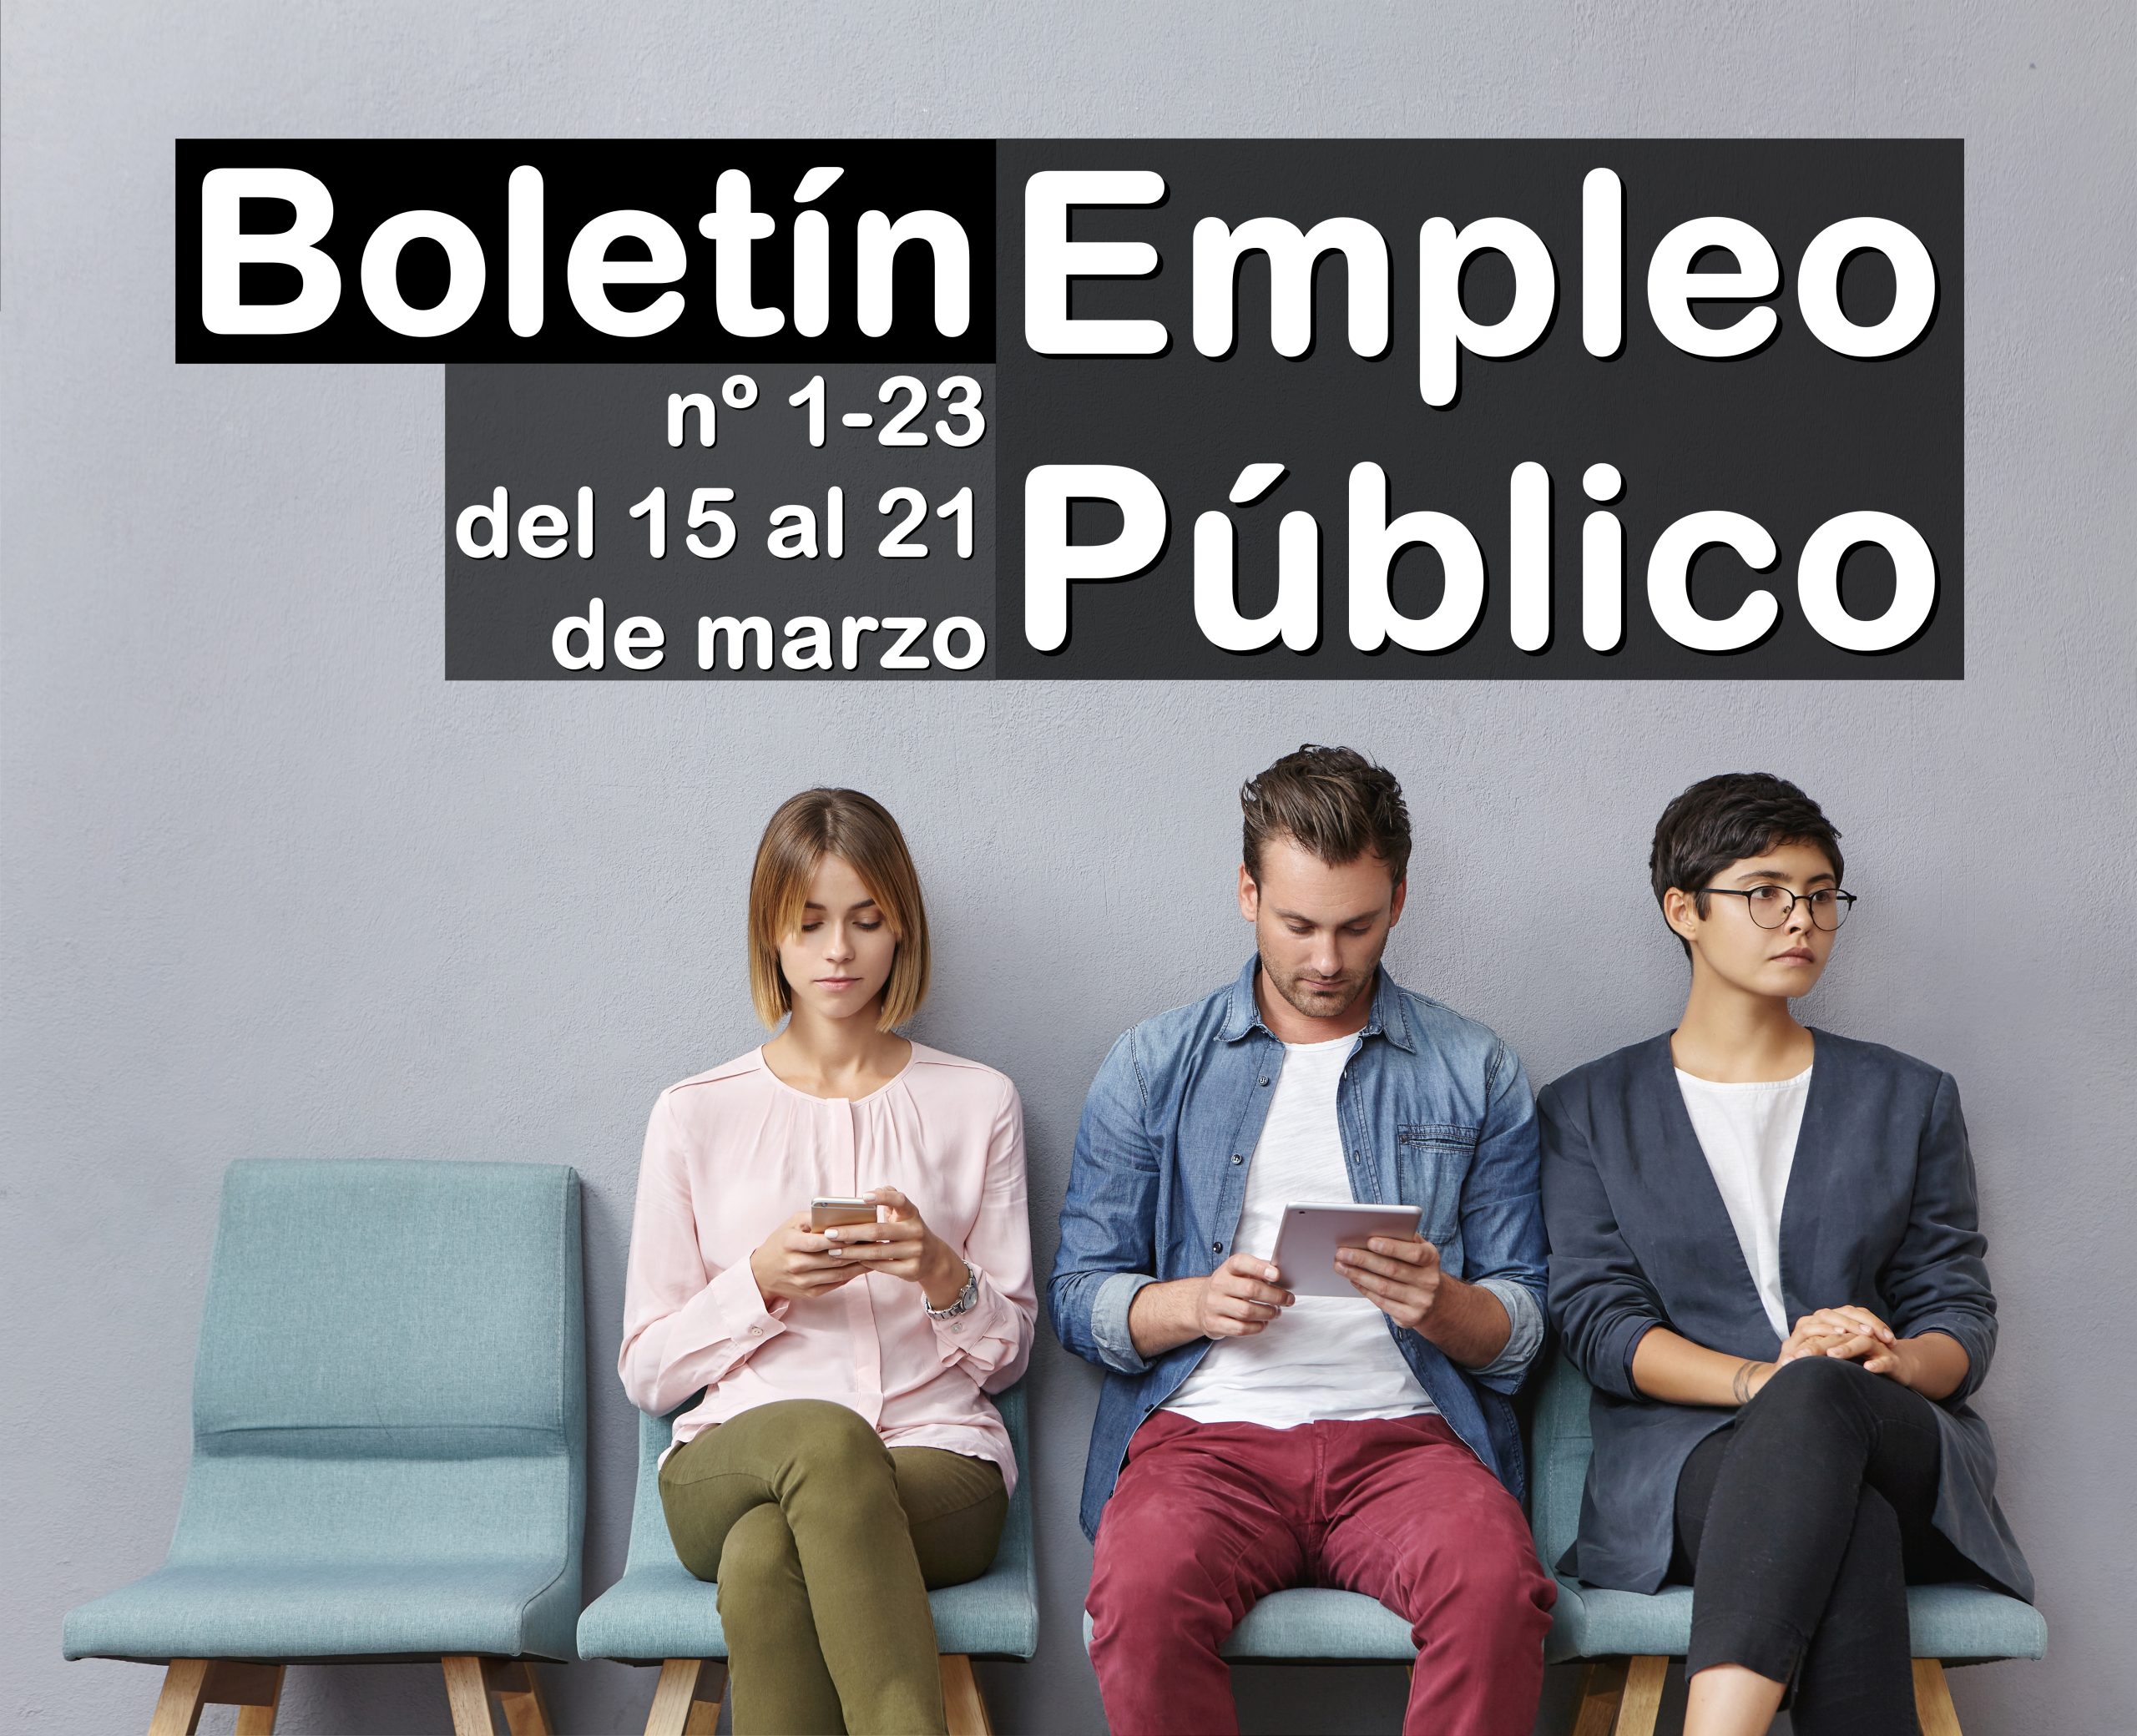 Boletin empleo publico murciaoposiciones 1-23